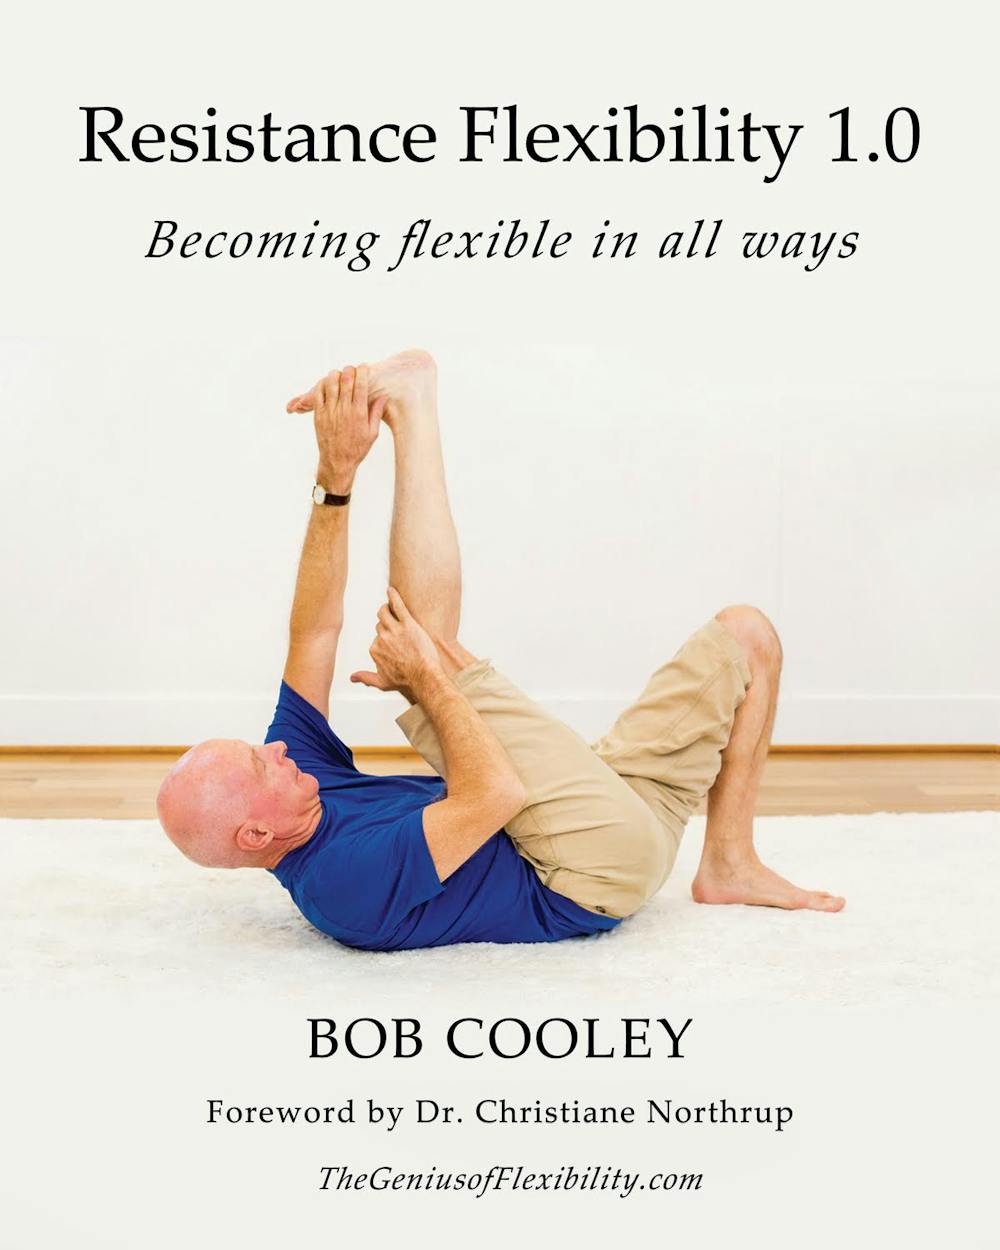 Resistance Flexibility 1.0 by Bob Cooley